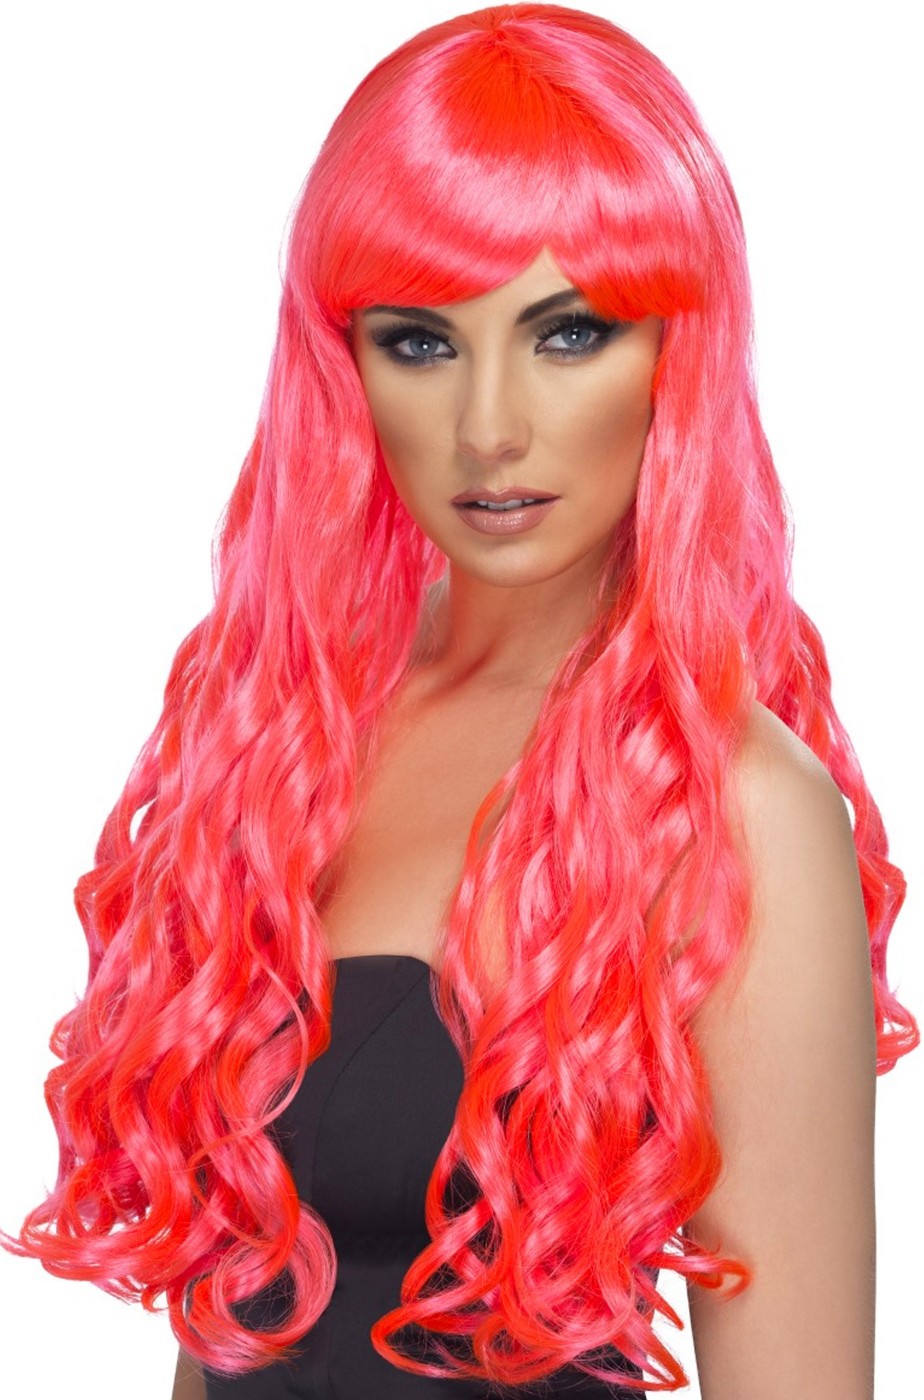 parrucca rosa lunga